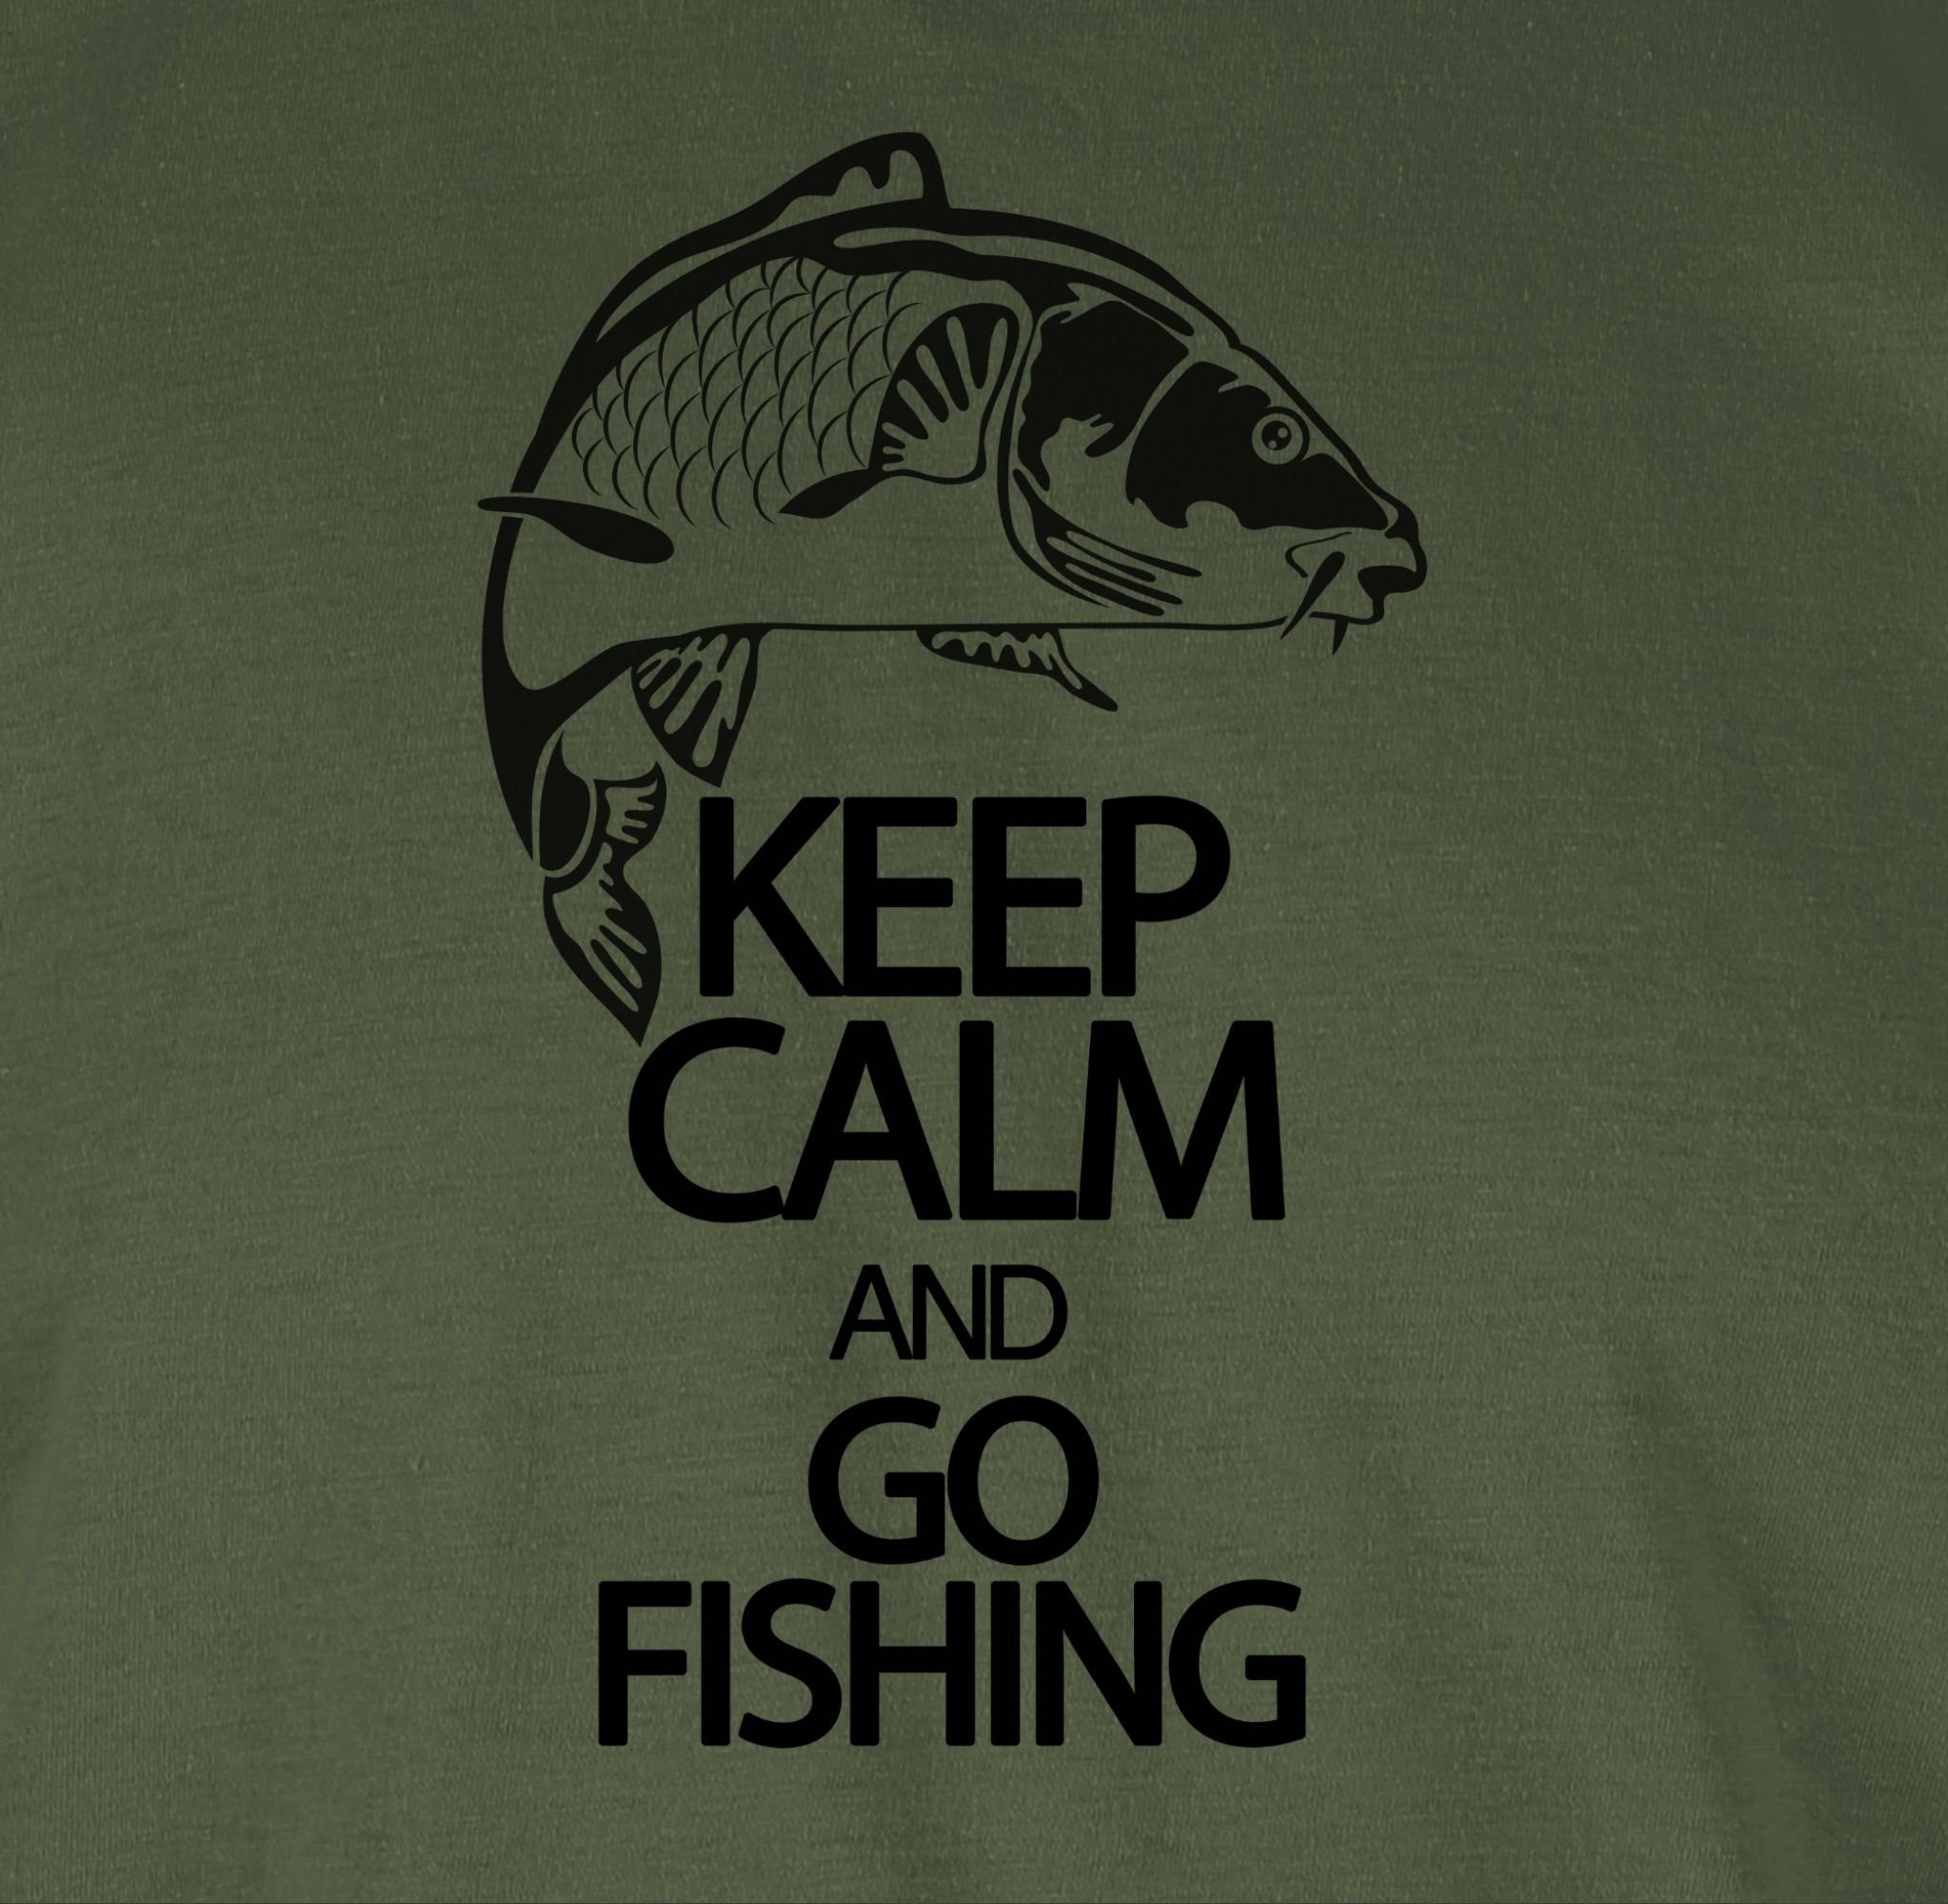 Keep go Army Geschenke Shirtracer T-Shirt Angler 1 Fishing calm and Grün